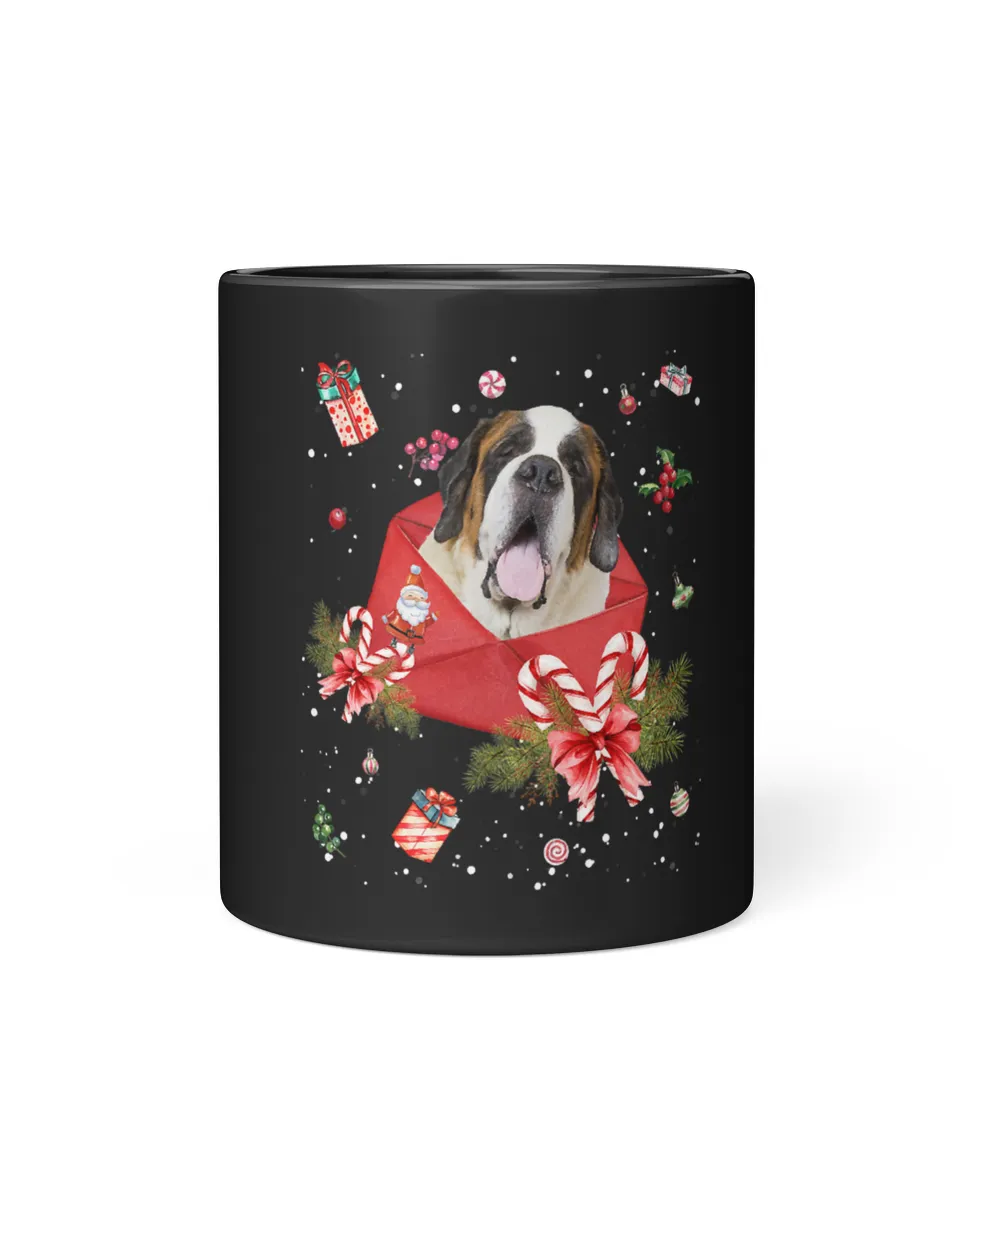 St Bernard Dog In Christmas Card Ornament Pajama Xmas400